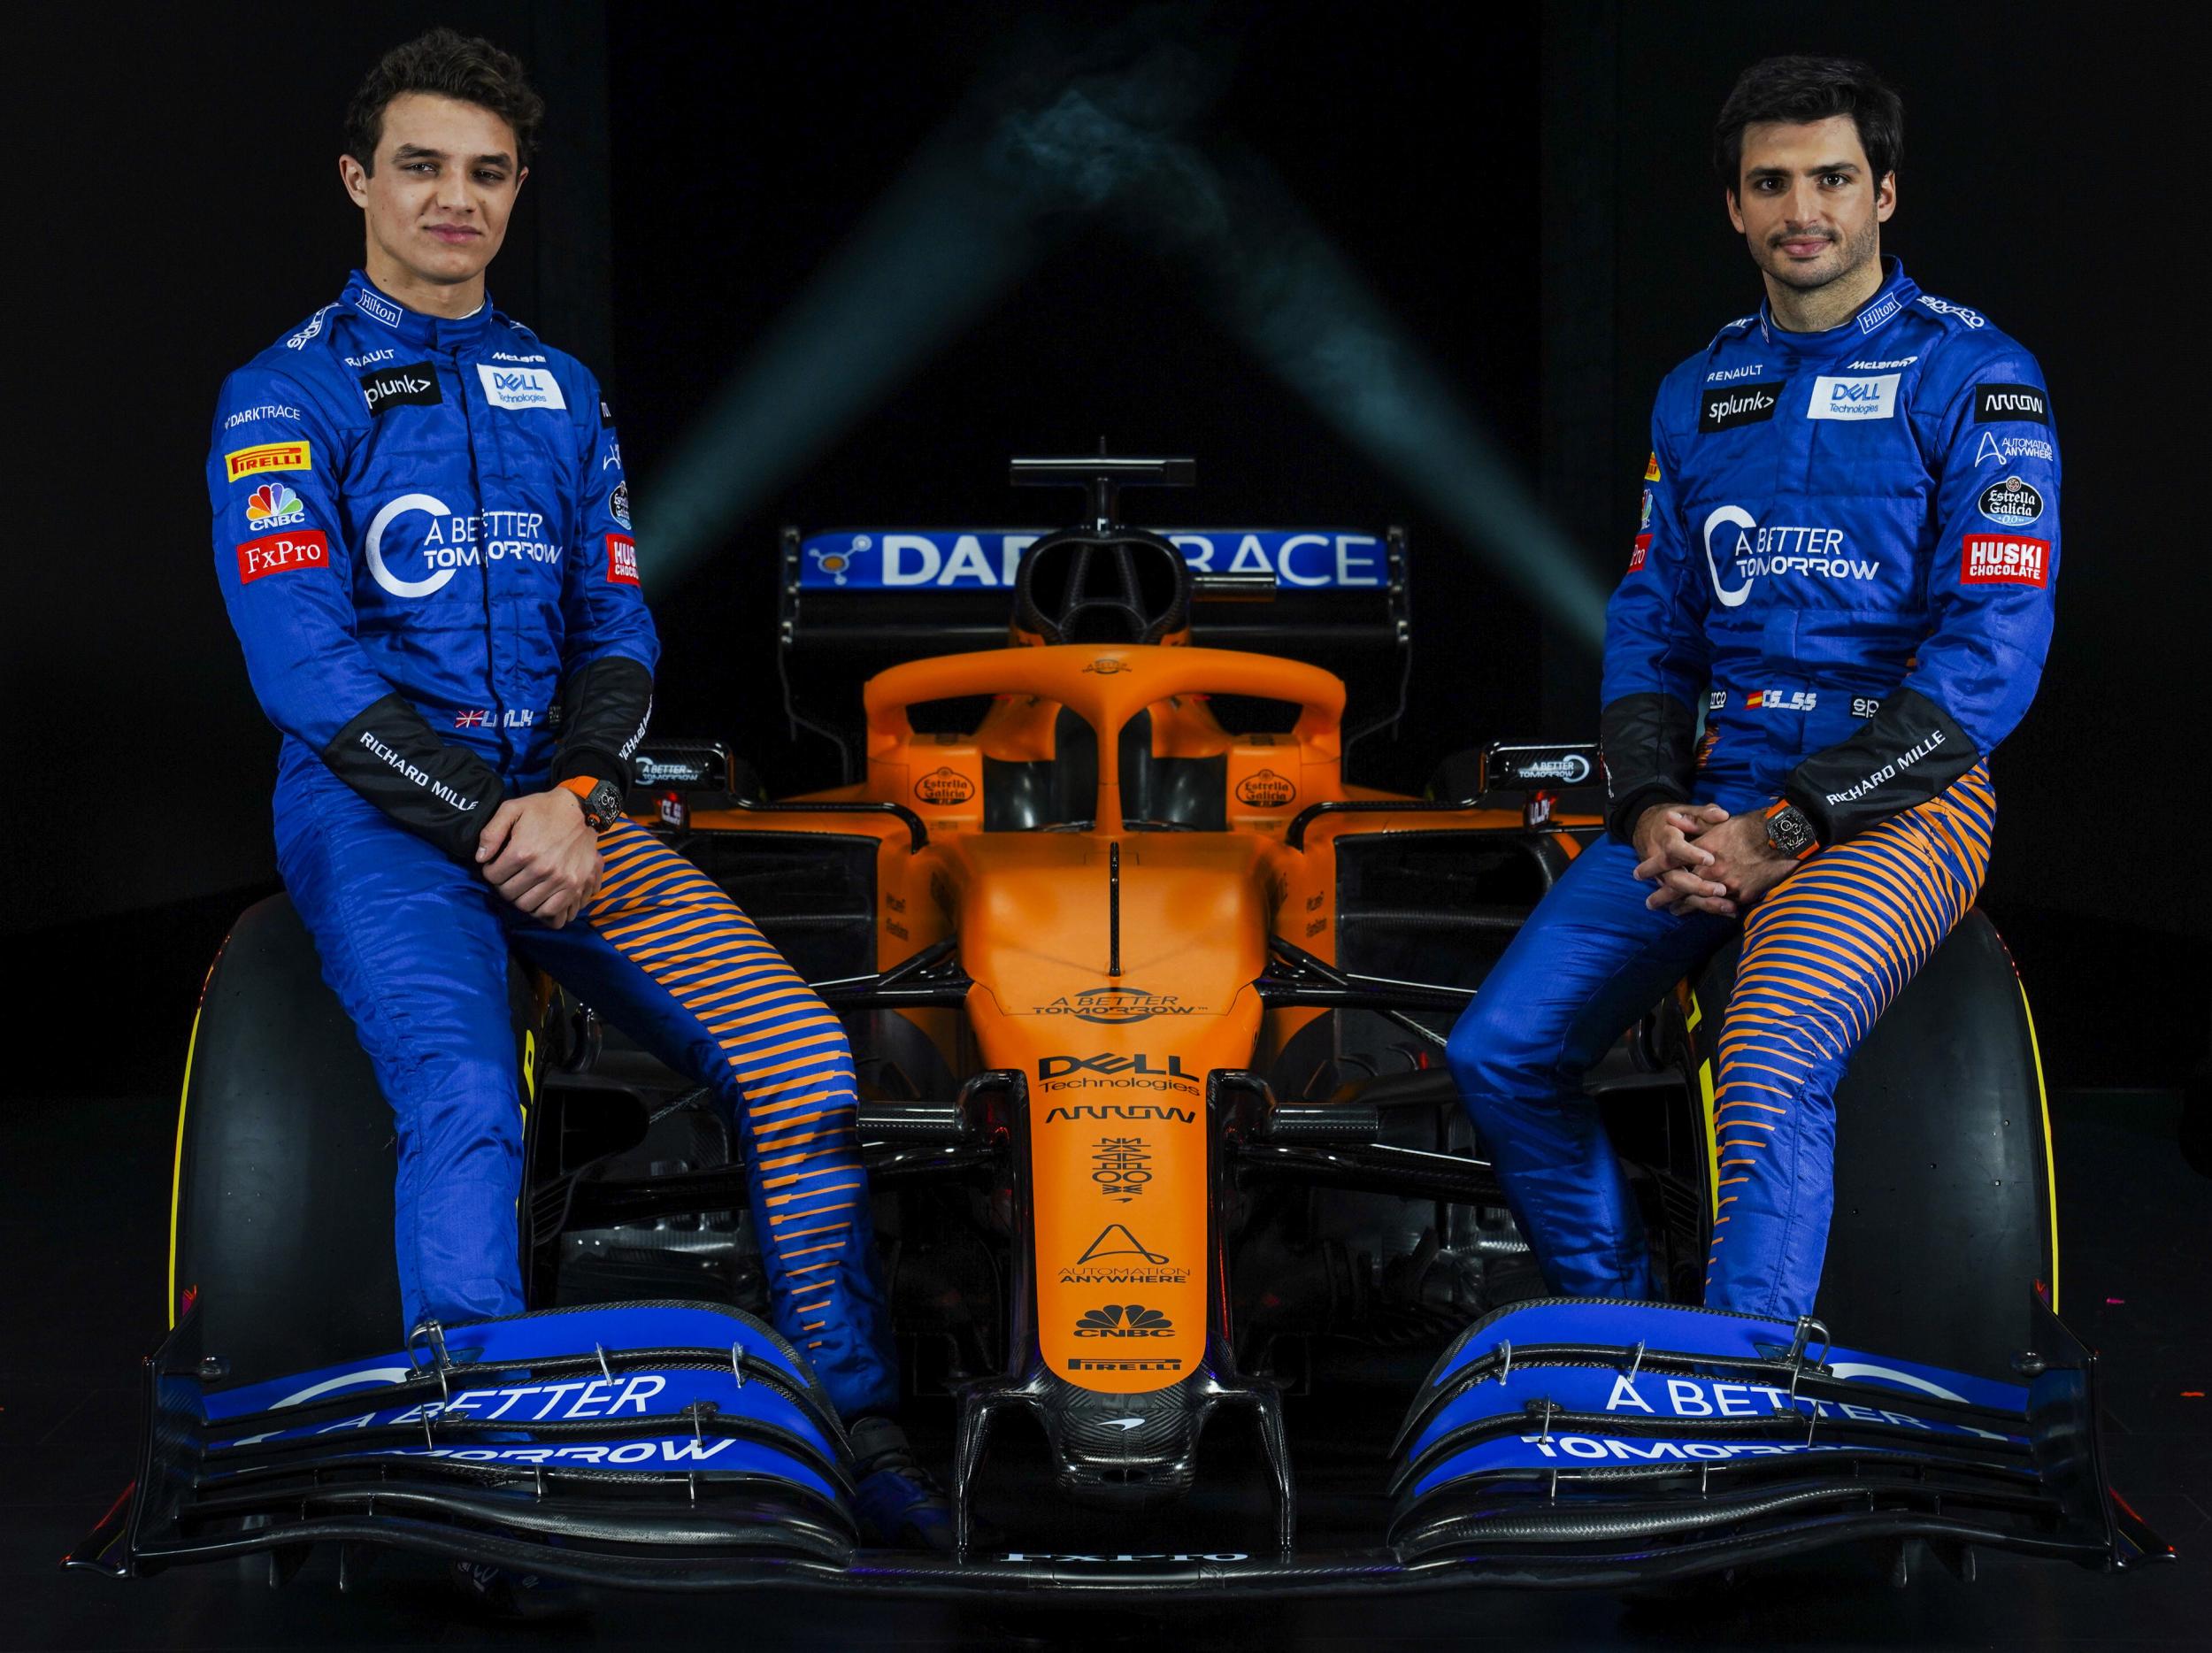 McLaren have unveiled their car for next season